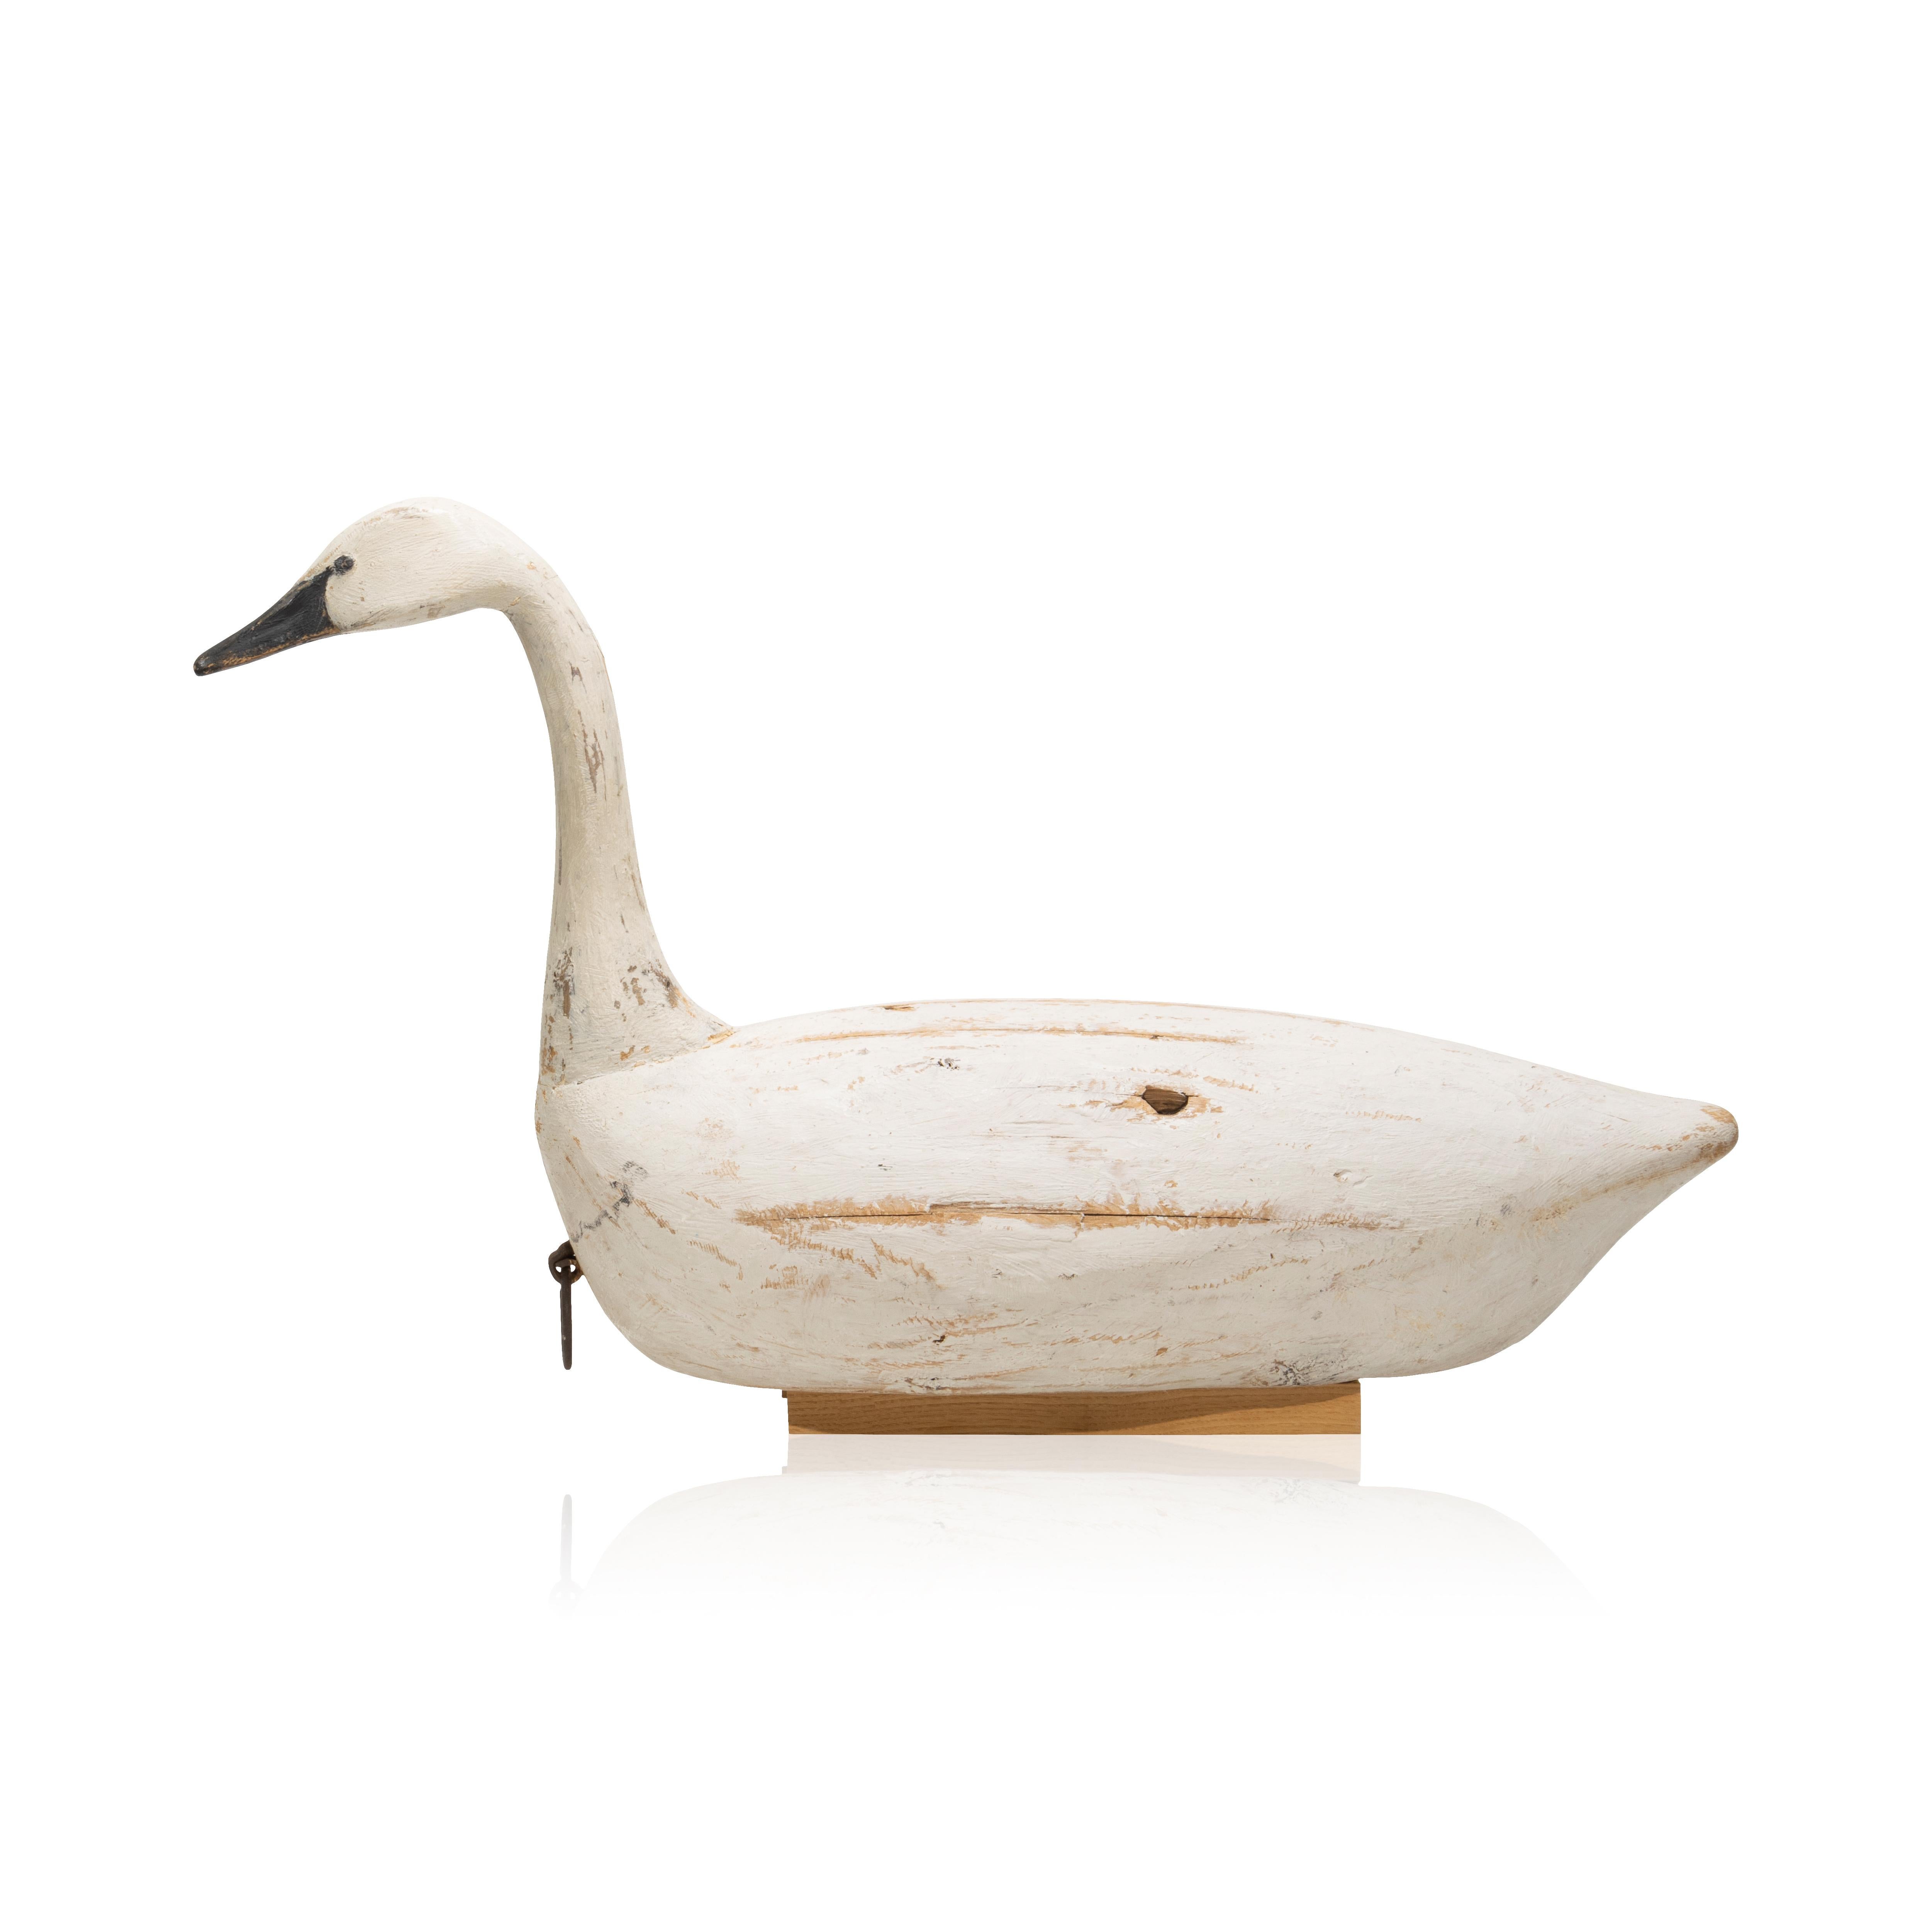 Full size whistling swan decoy by Reggie Birch, Chincoteague, Virginia. 